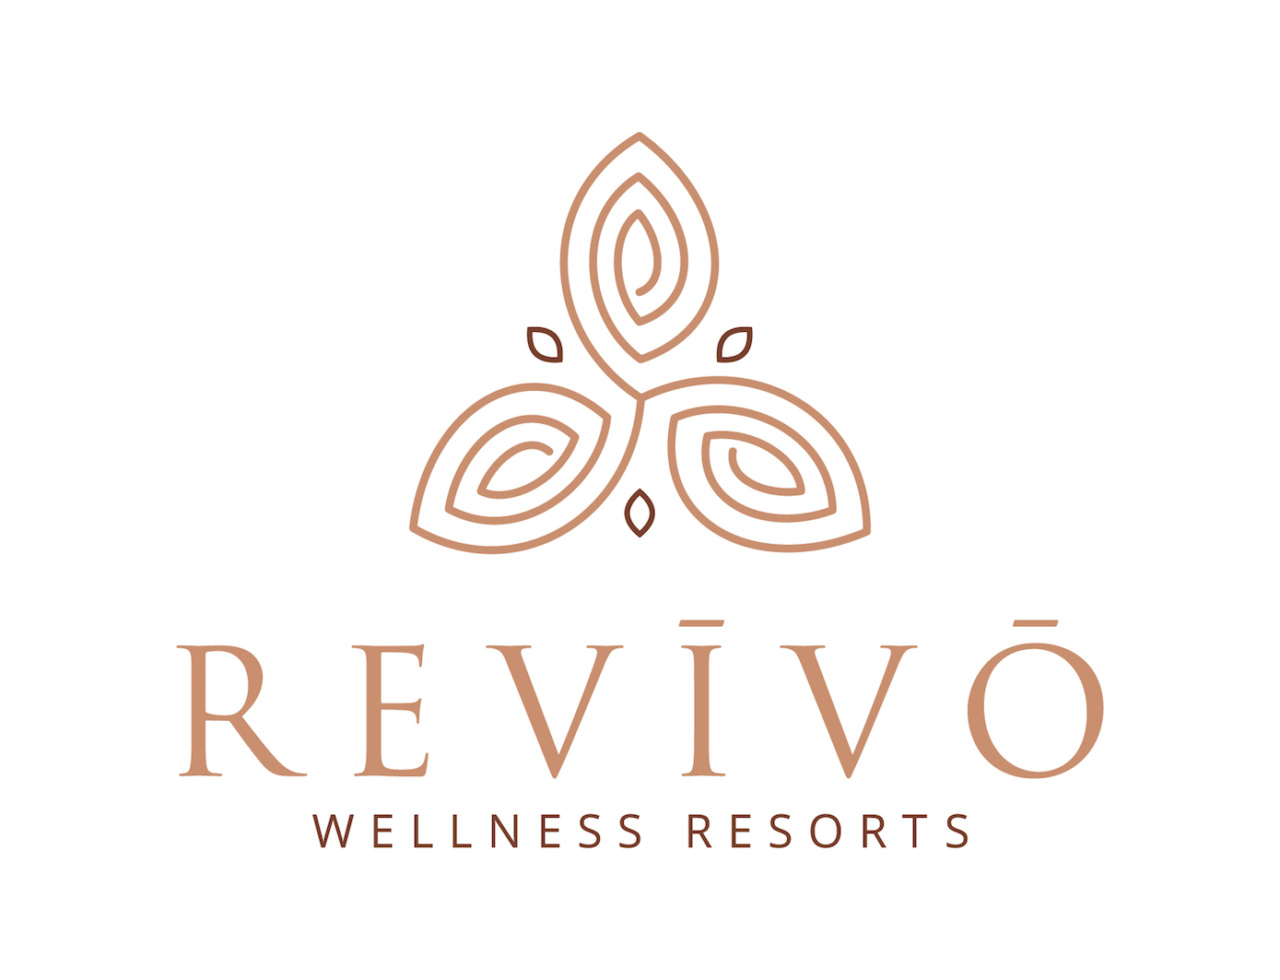 REVIVO-white-logo-1280x980.jpg